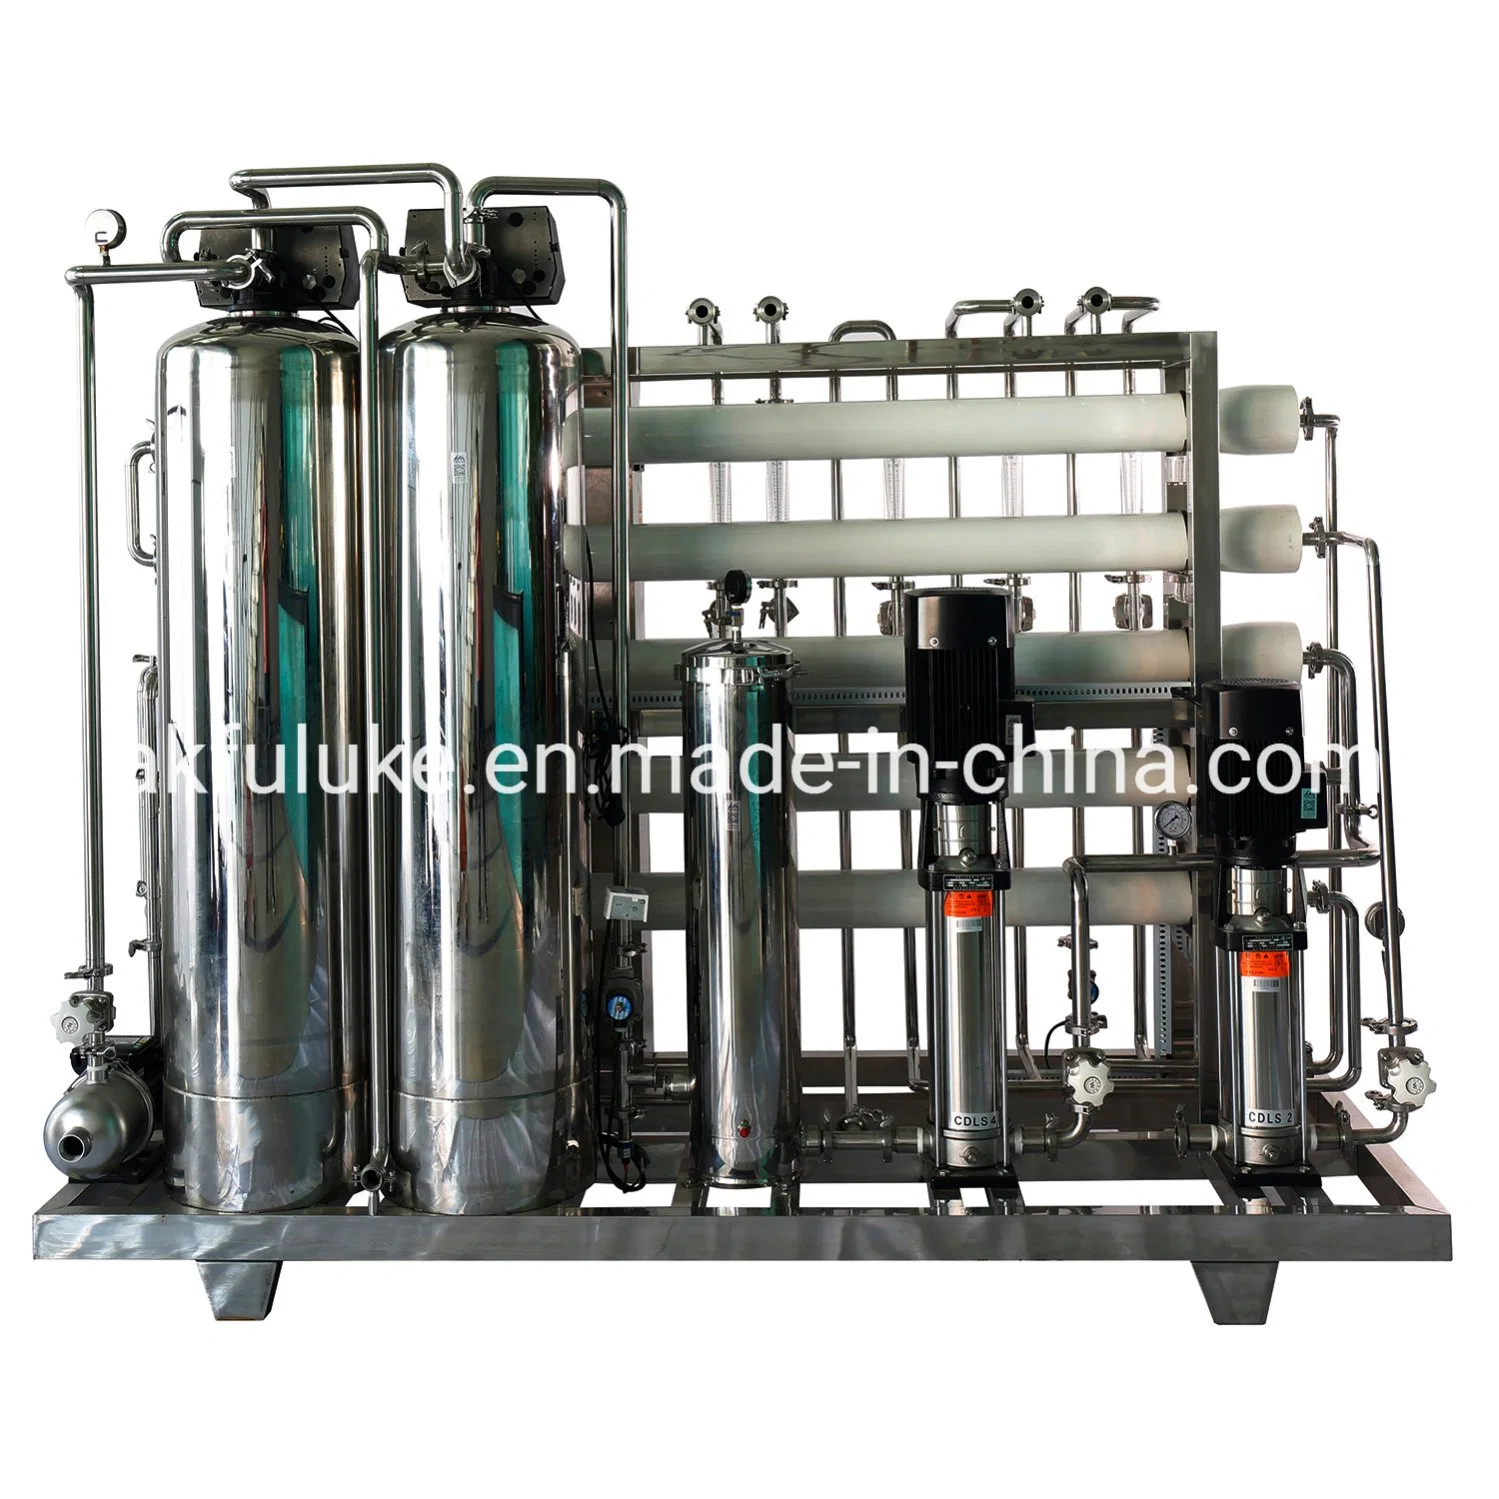 Treatment Water Purification Equipment Sewage Water Treatment Equipments Sea Water Treatment Equipment